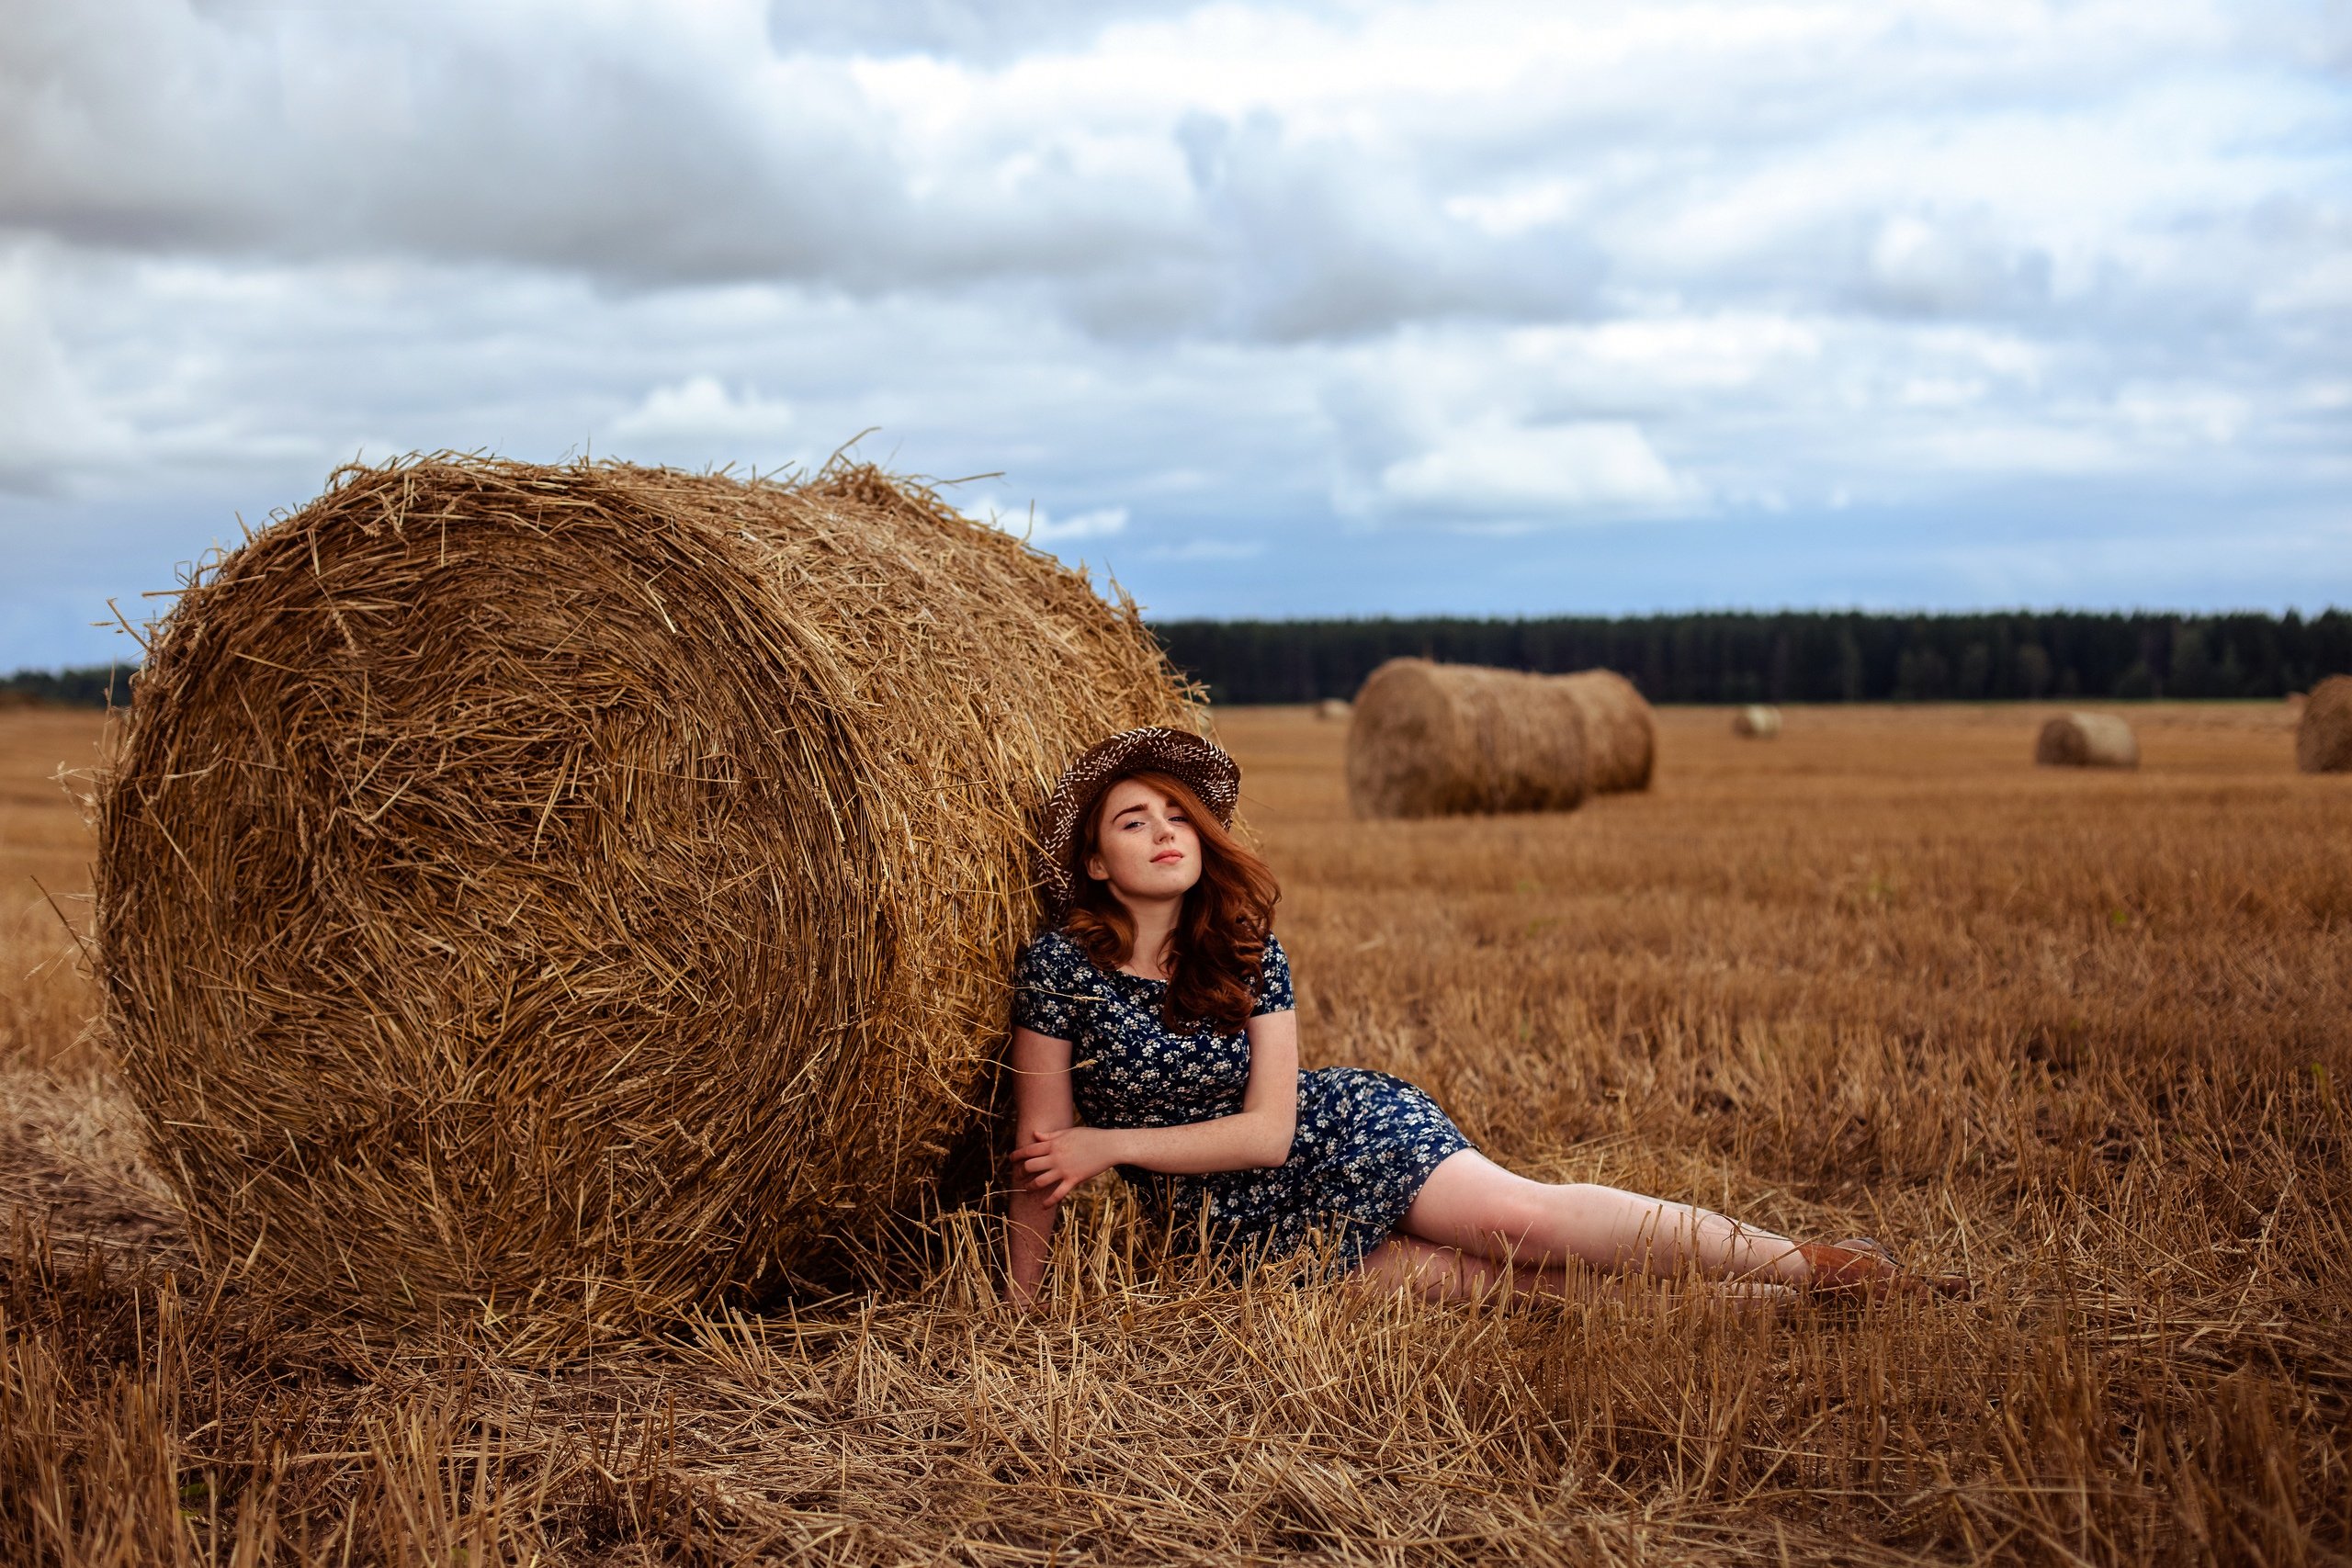 На сене лежит сама. Скирда сноп. Фотосессия в поле. Поле со стогами сена. Фотосессия с сеном.